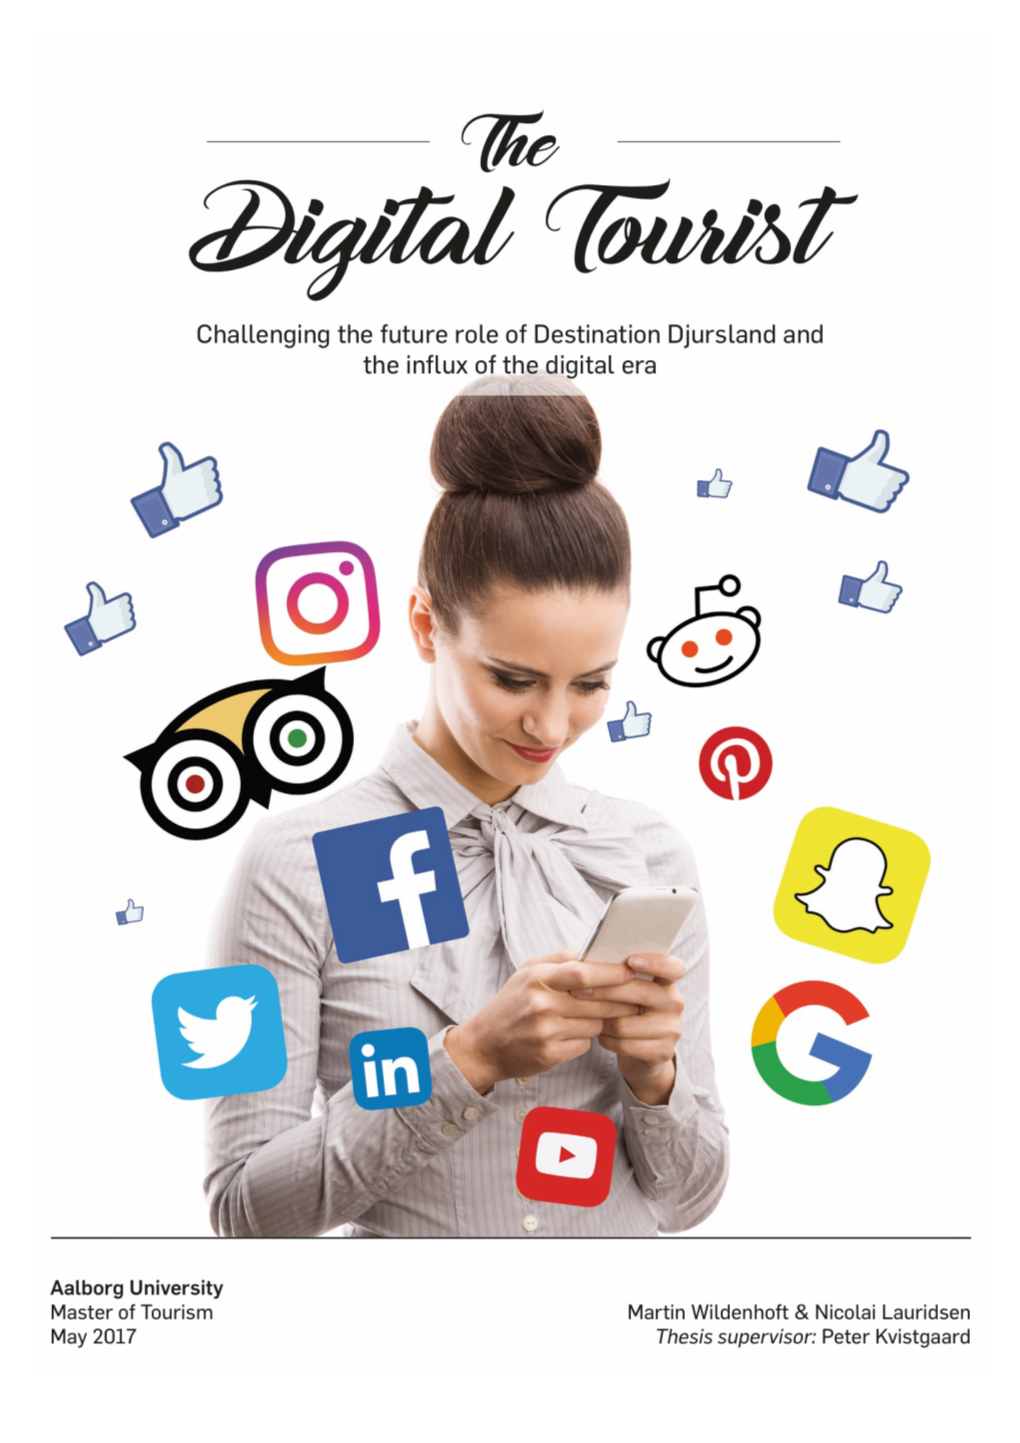 The Digital Tourist